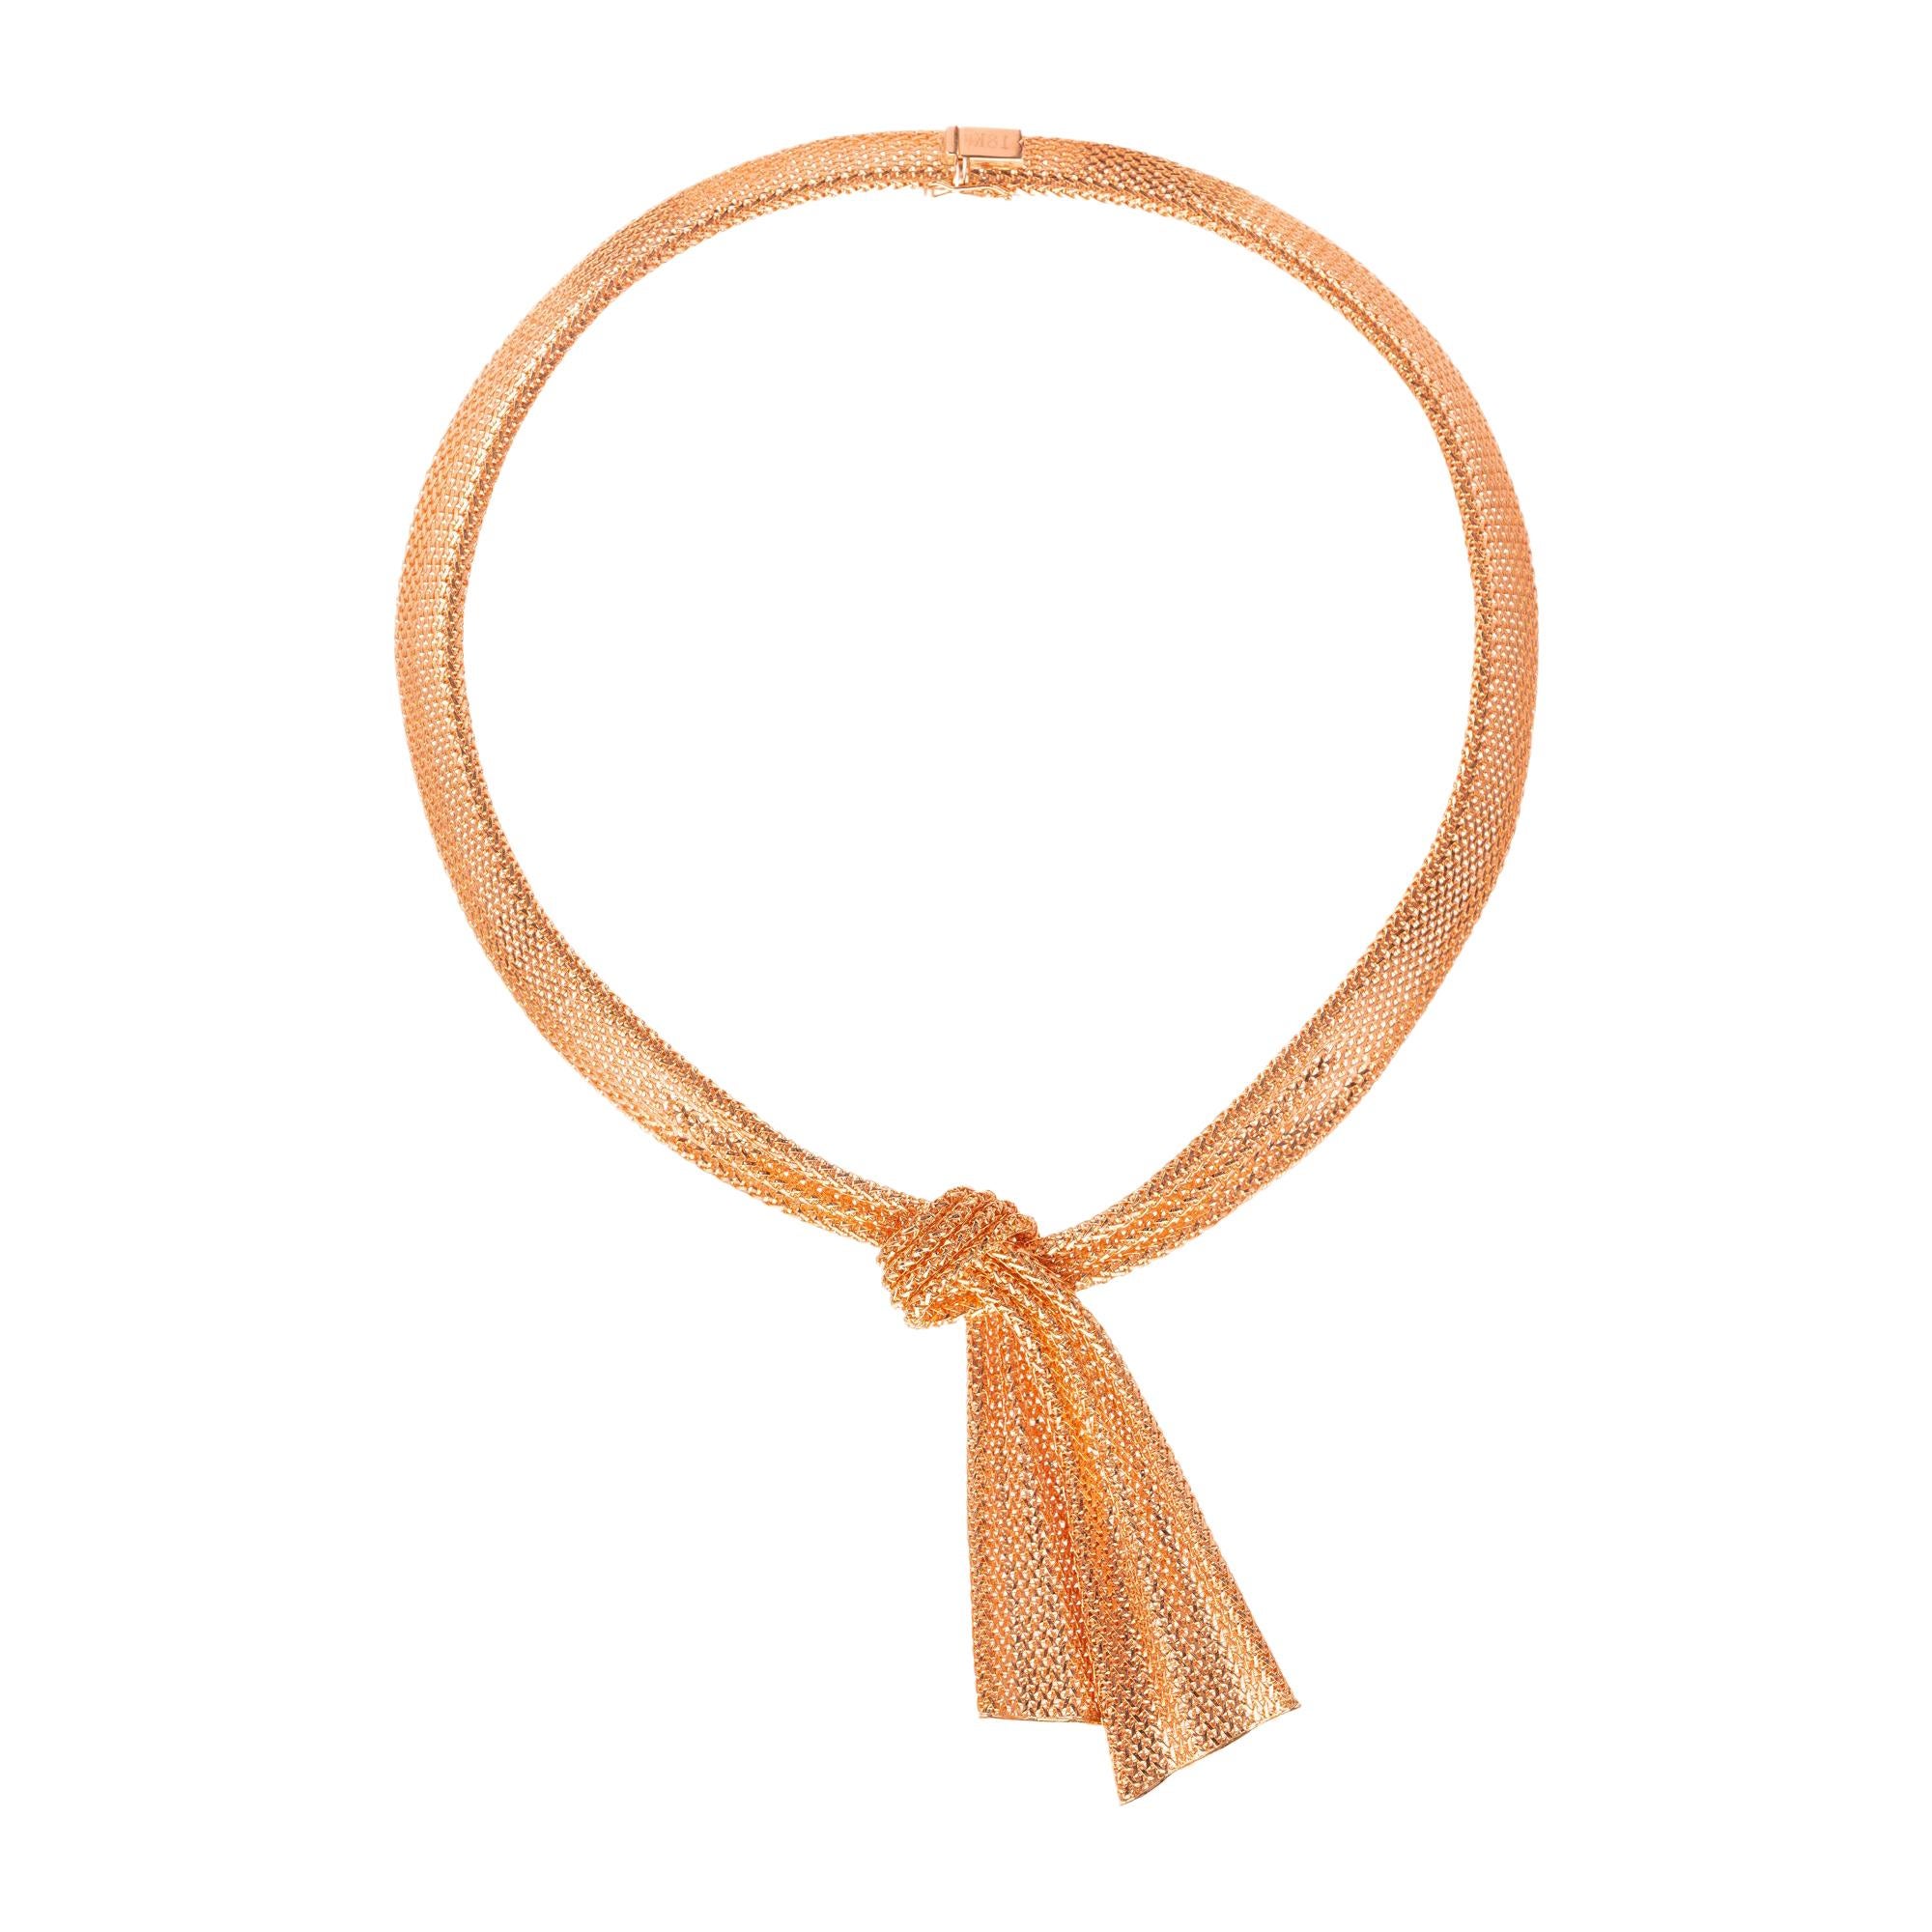 18 Karat Rose Gold Bow Design Scarf Style Mesh Necklace